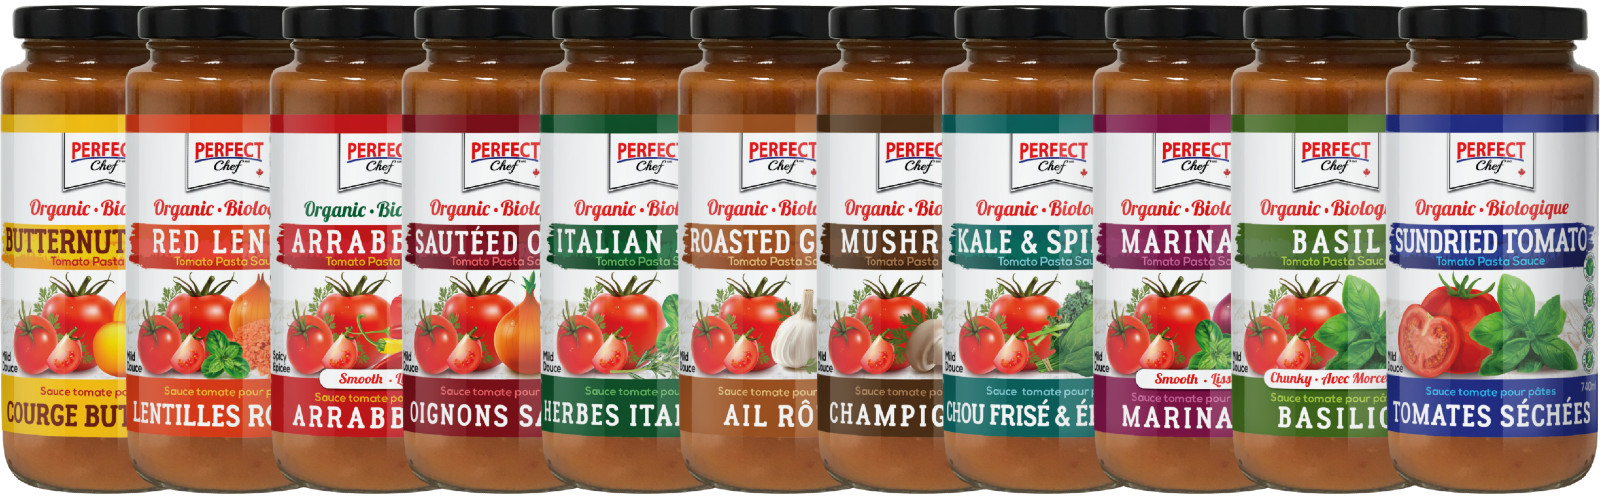 Perfect Chef Organic Pasta Sauce banner